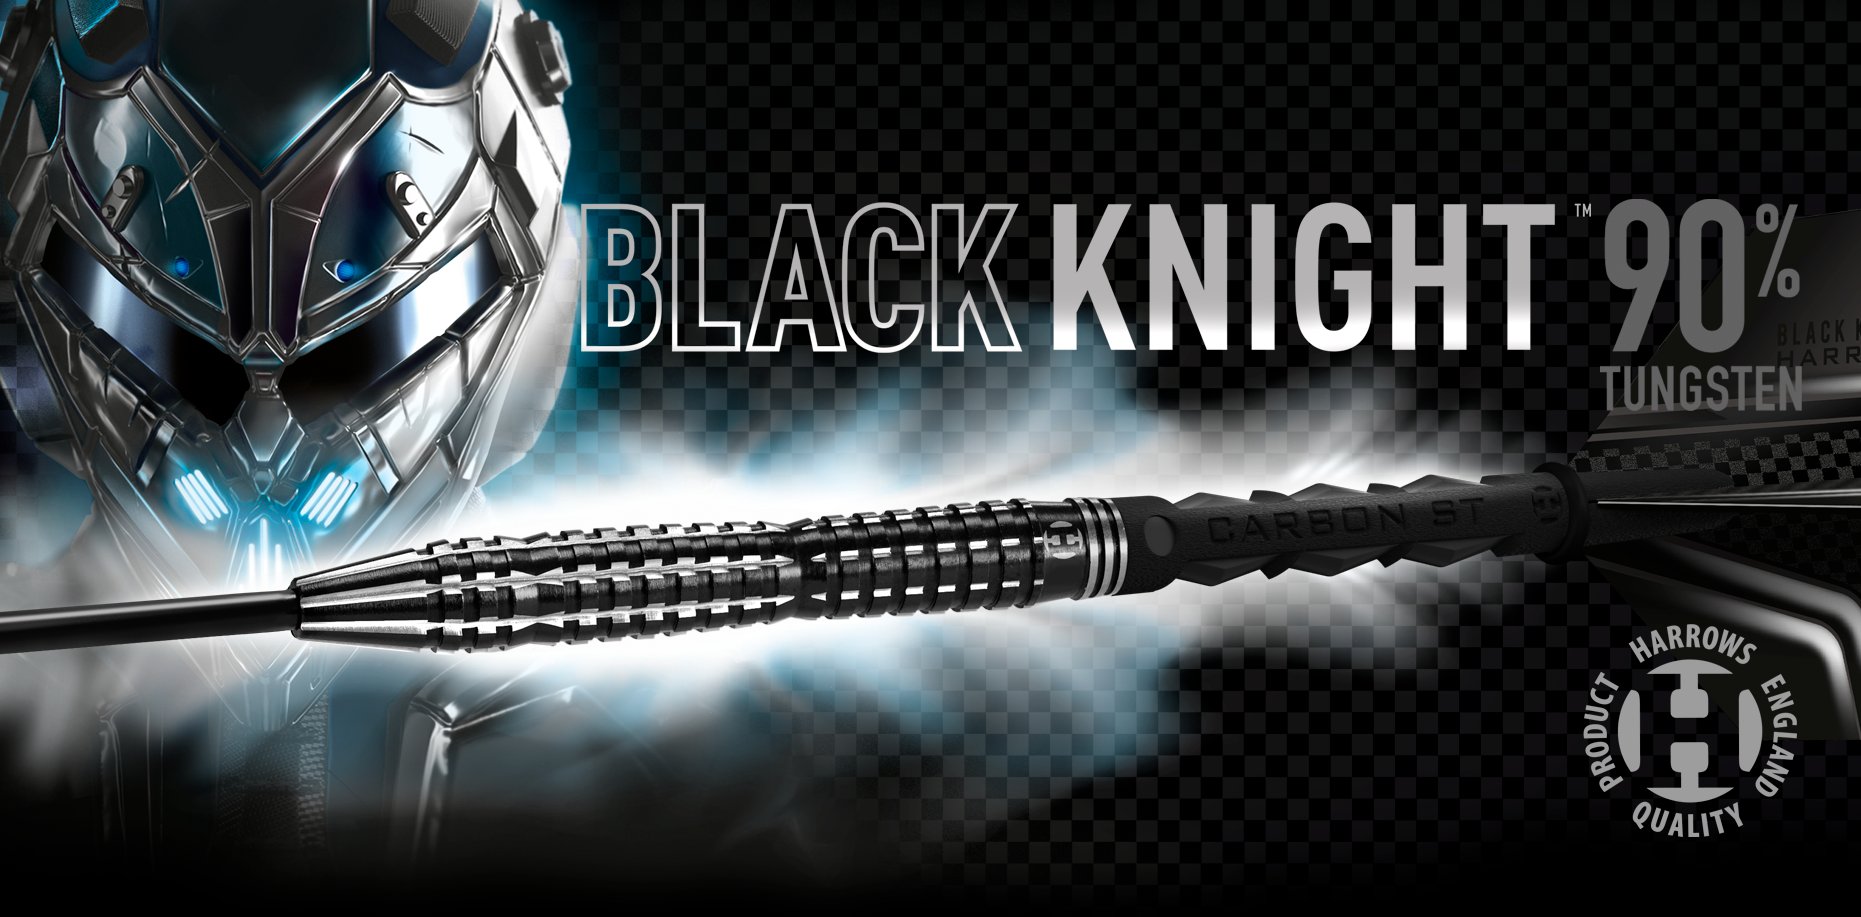 Sada šipek Harrows steel Black Knight 21g, 90% wolfram